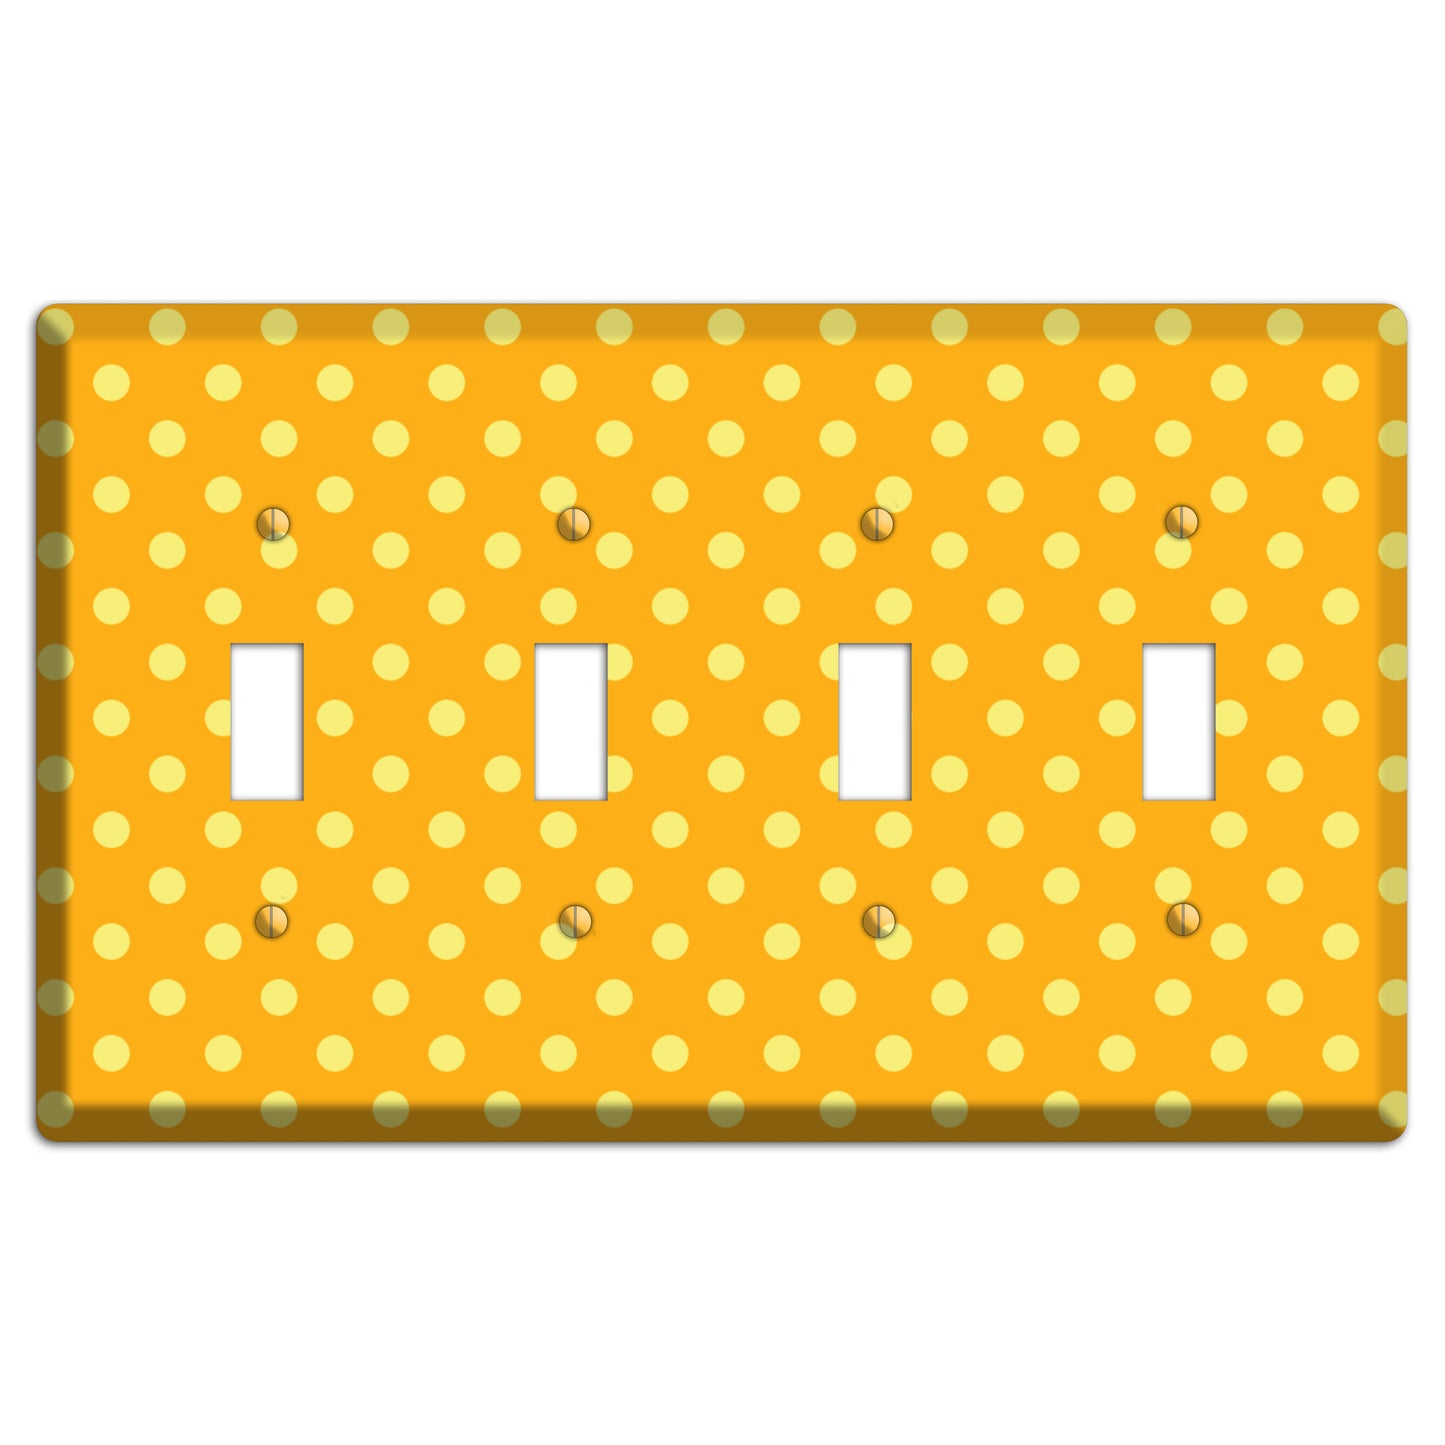 Orange and Yellow Polka Dot 4 Toggle Wallplate